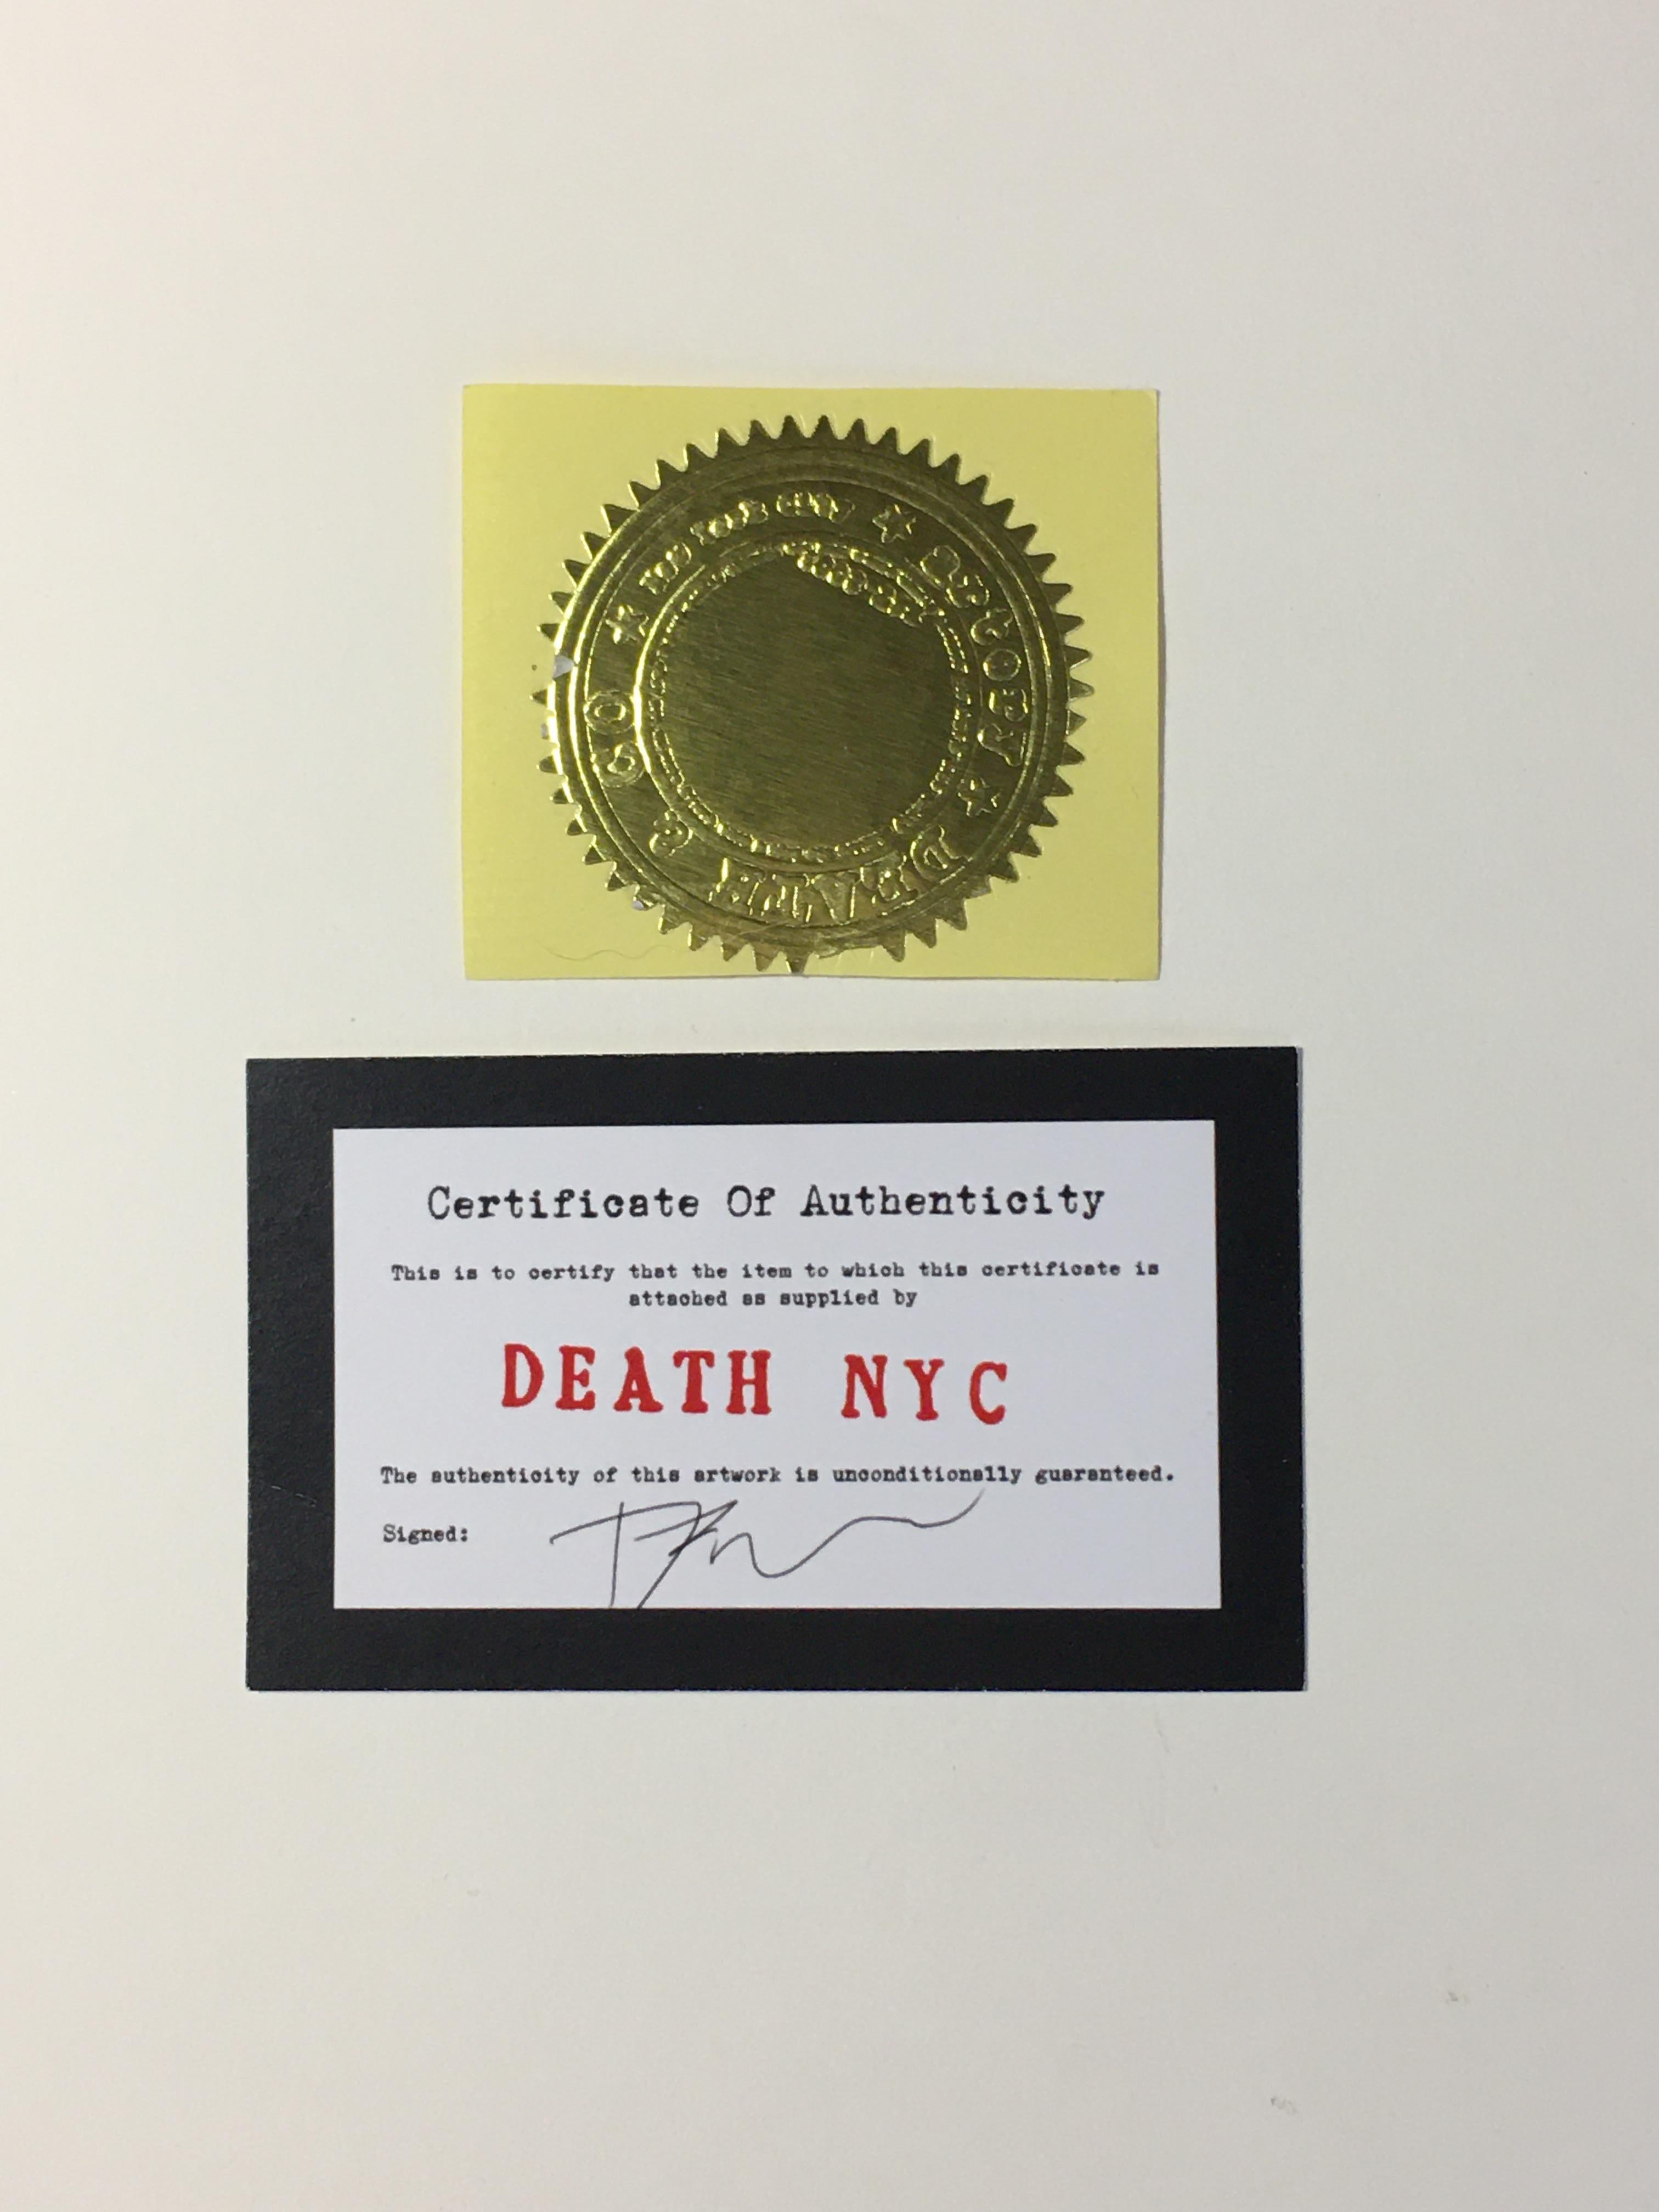 Death NYC -  Katy Perry death   - 2015 3